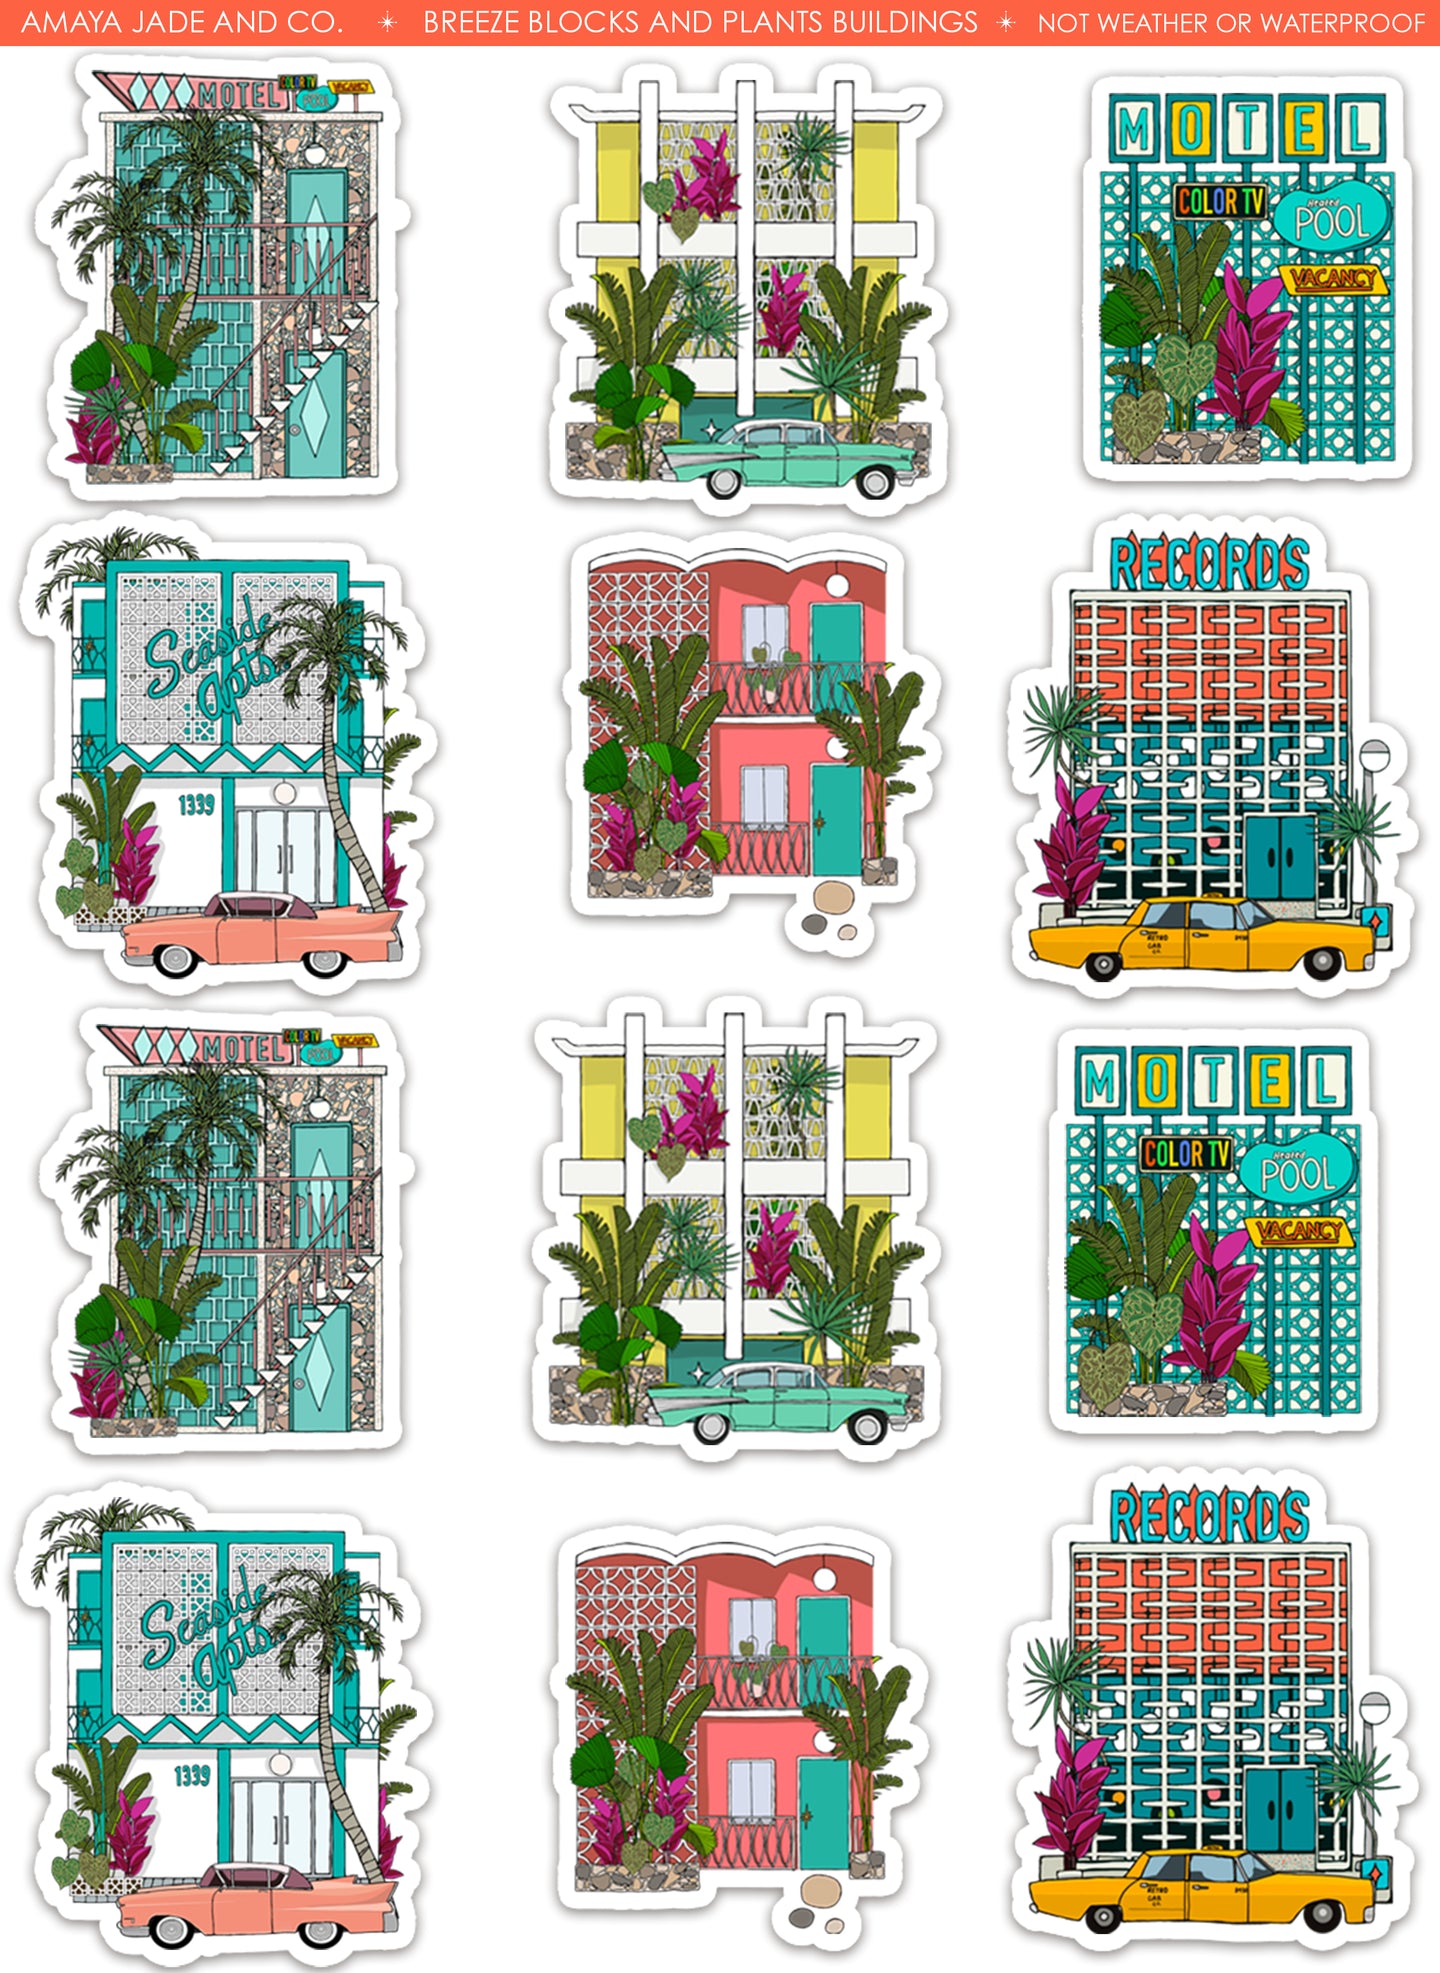 Breeze Blocks and Plants Buildings Art Sticker Set